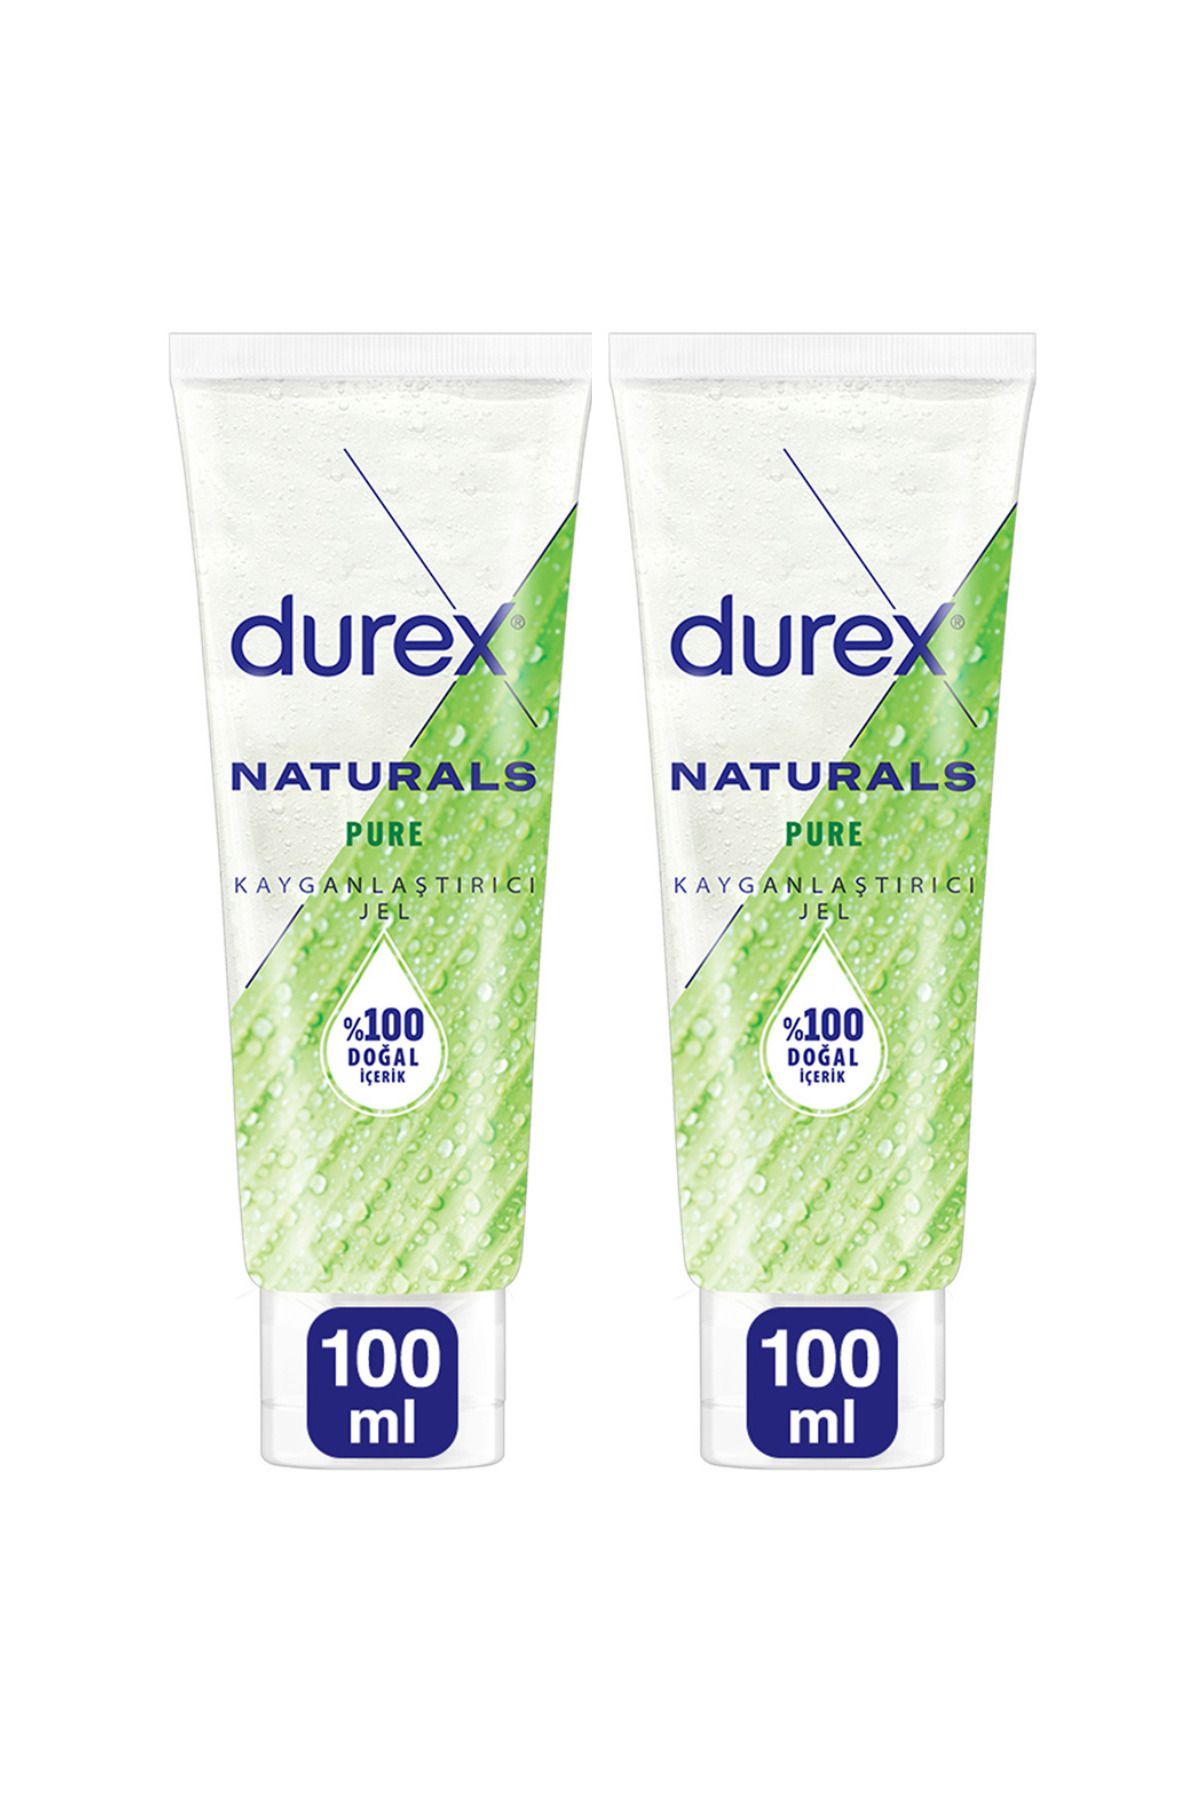 Durex Naturals Pure Kayganlaştırıcı Jel 100 ml X 2 Adet